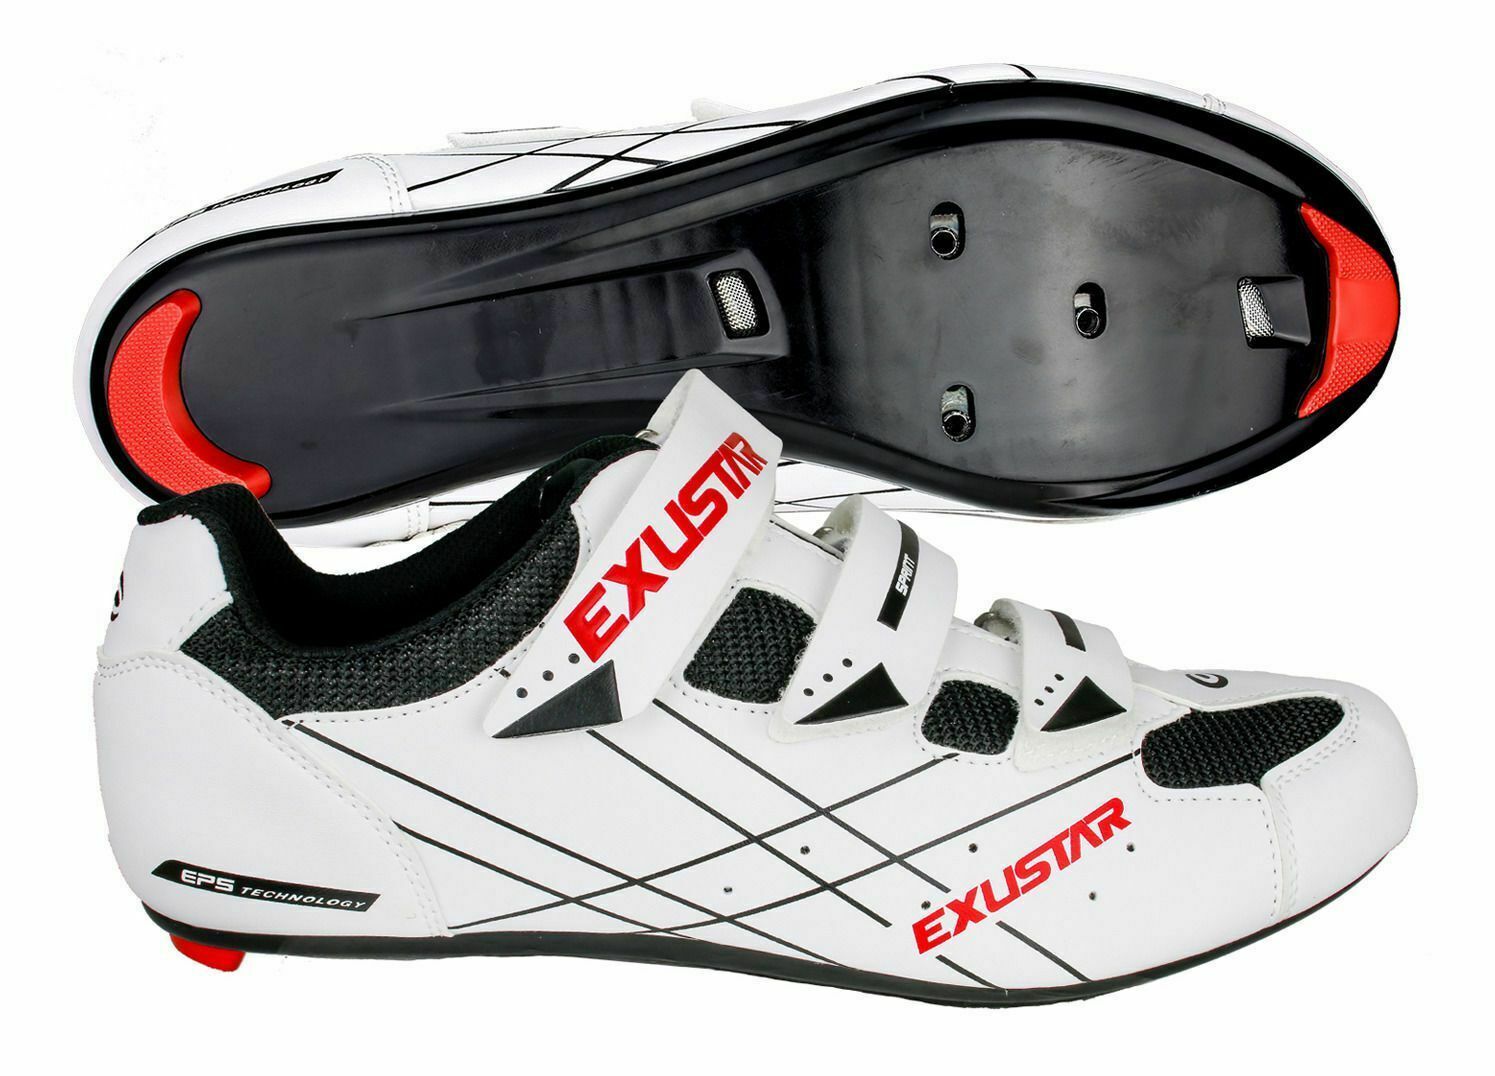 E-SR493 Road Bike Shoes Size 48